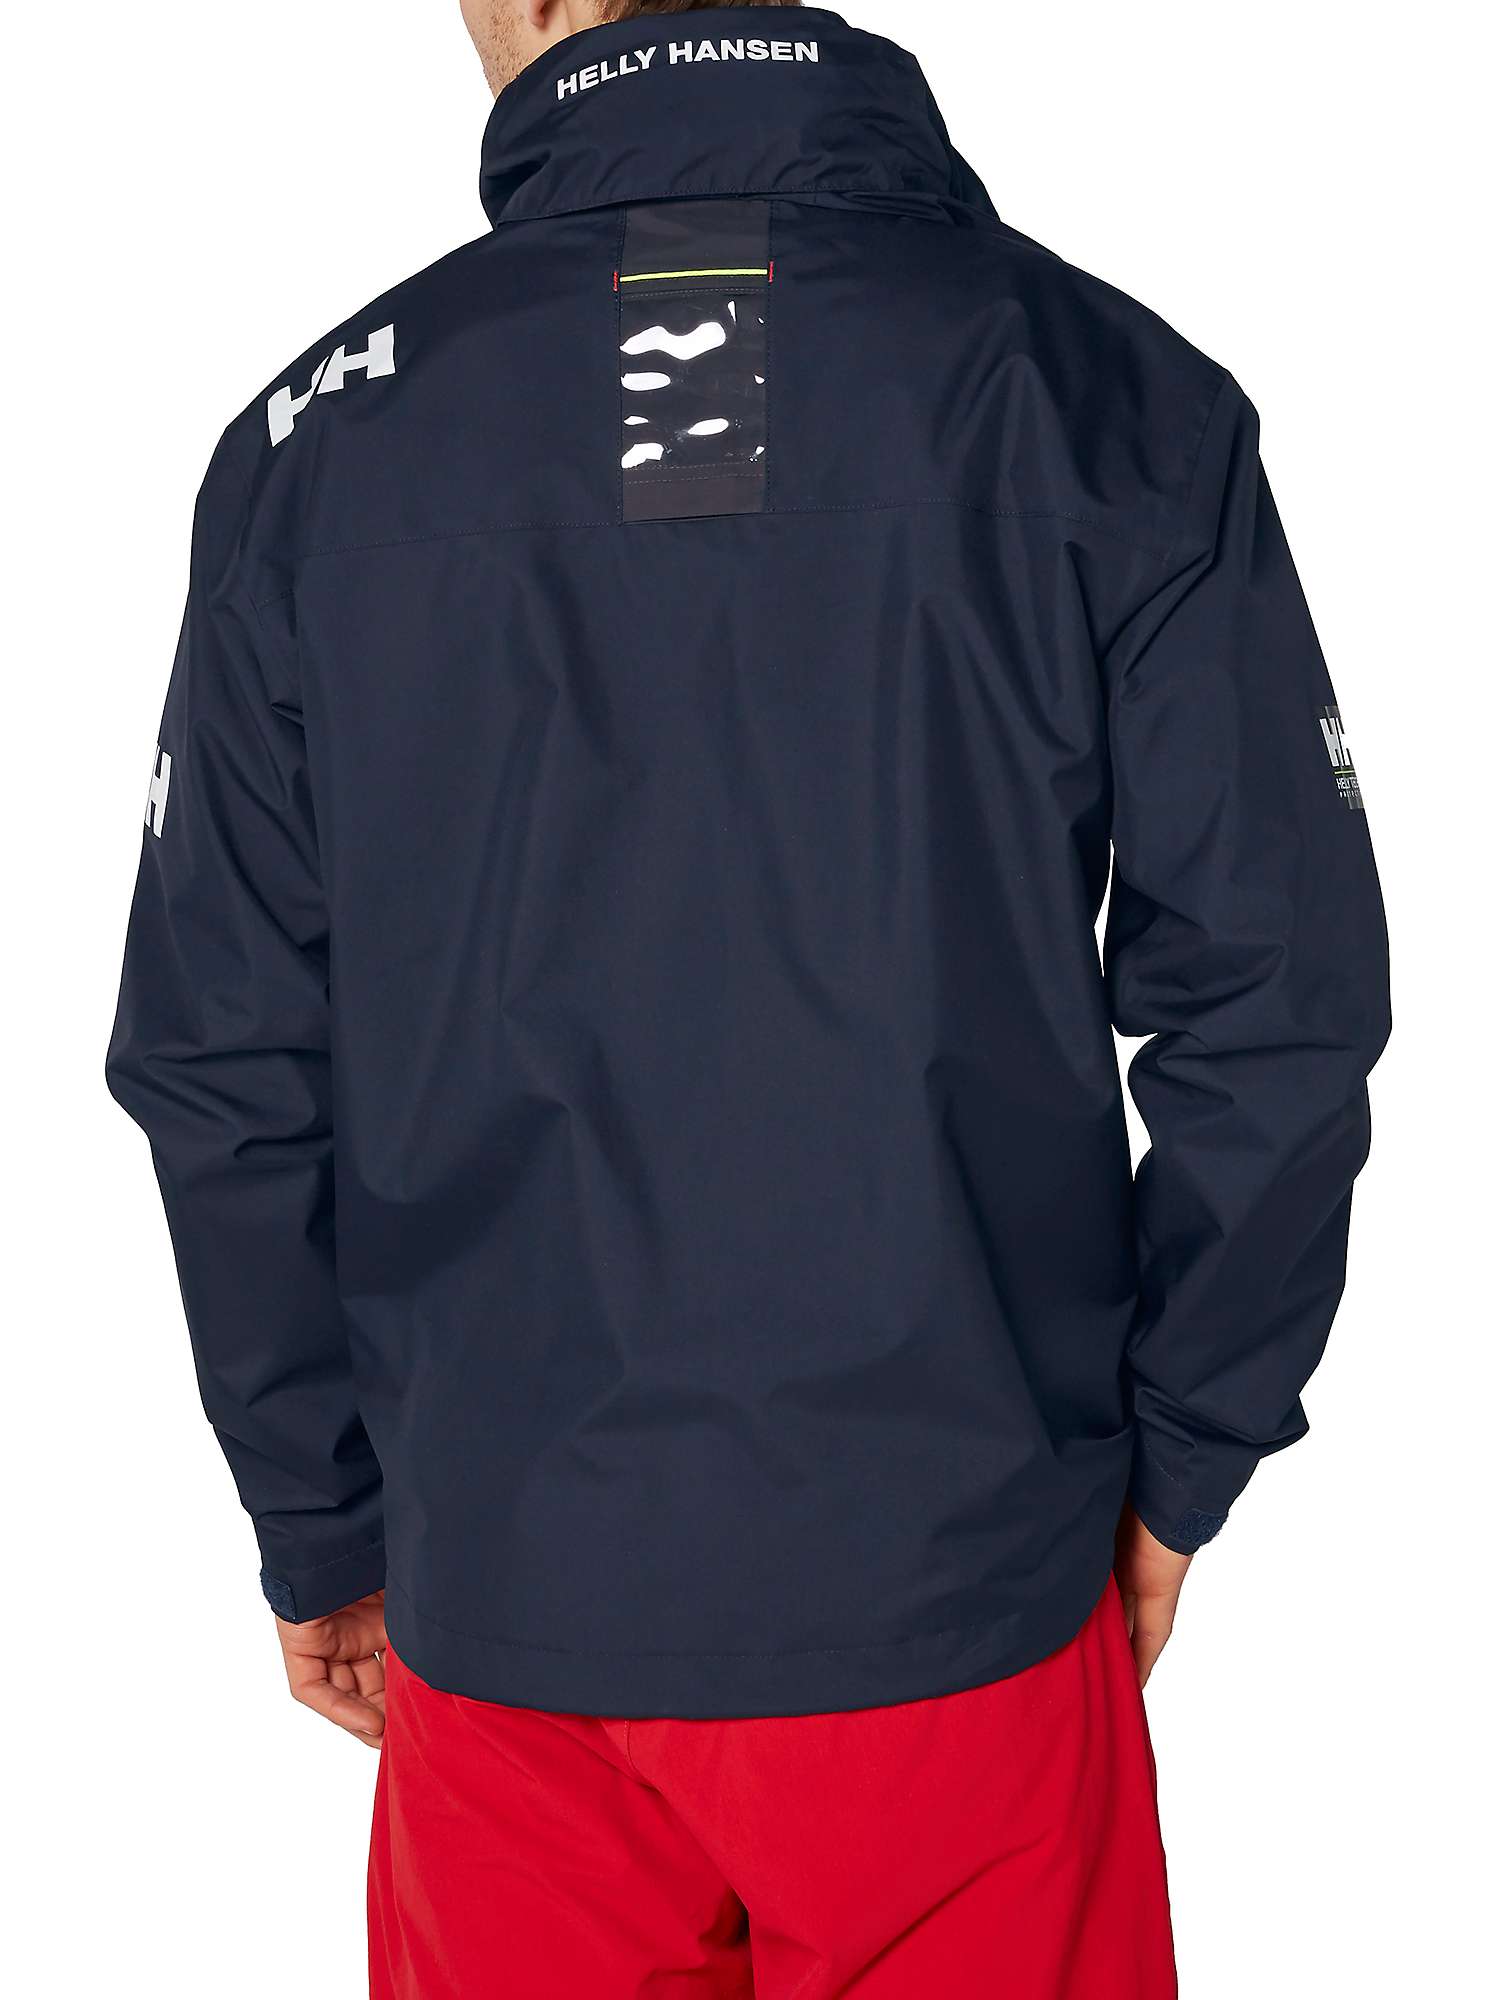 Buy Helly Hansen Crew Hooded Midlayer Men's Jacket, Navy Online at johnlewis.com